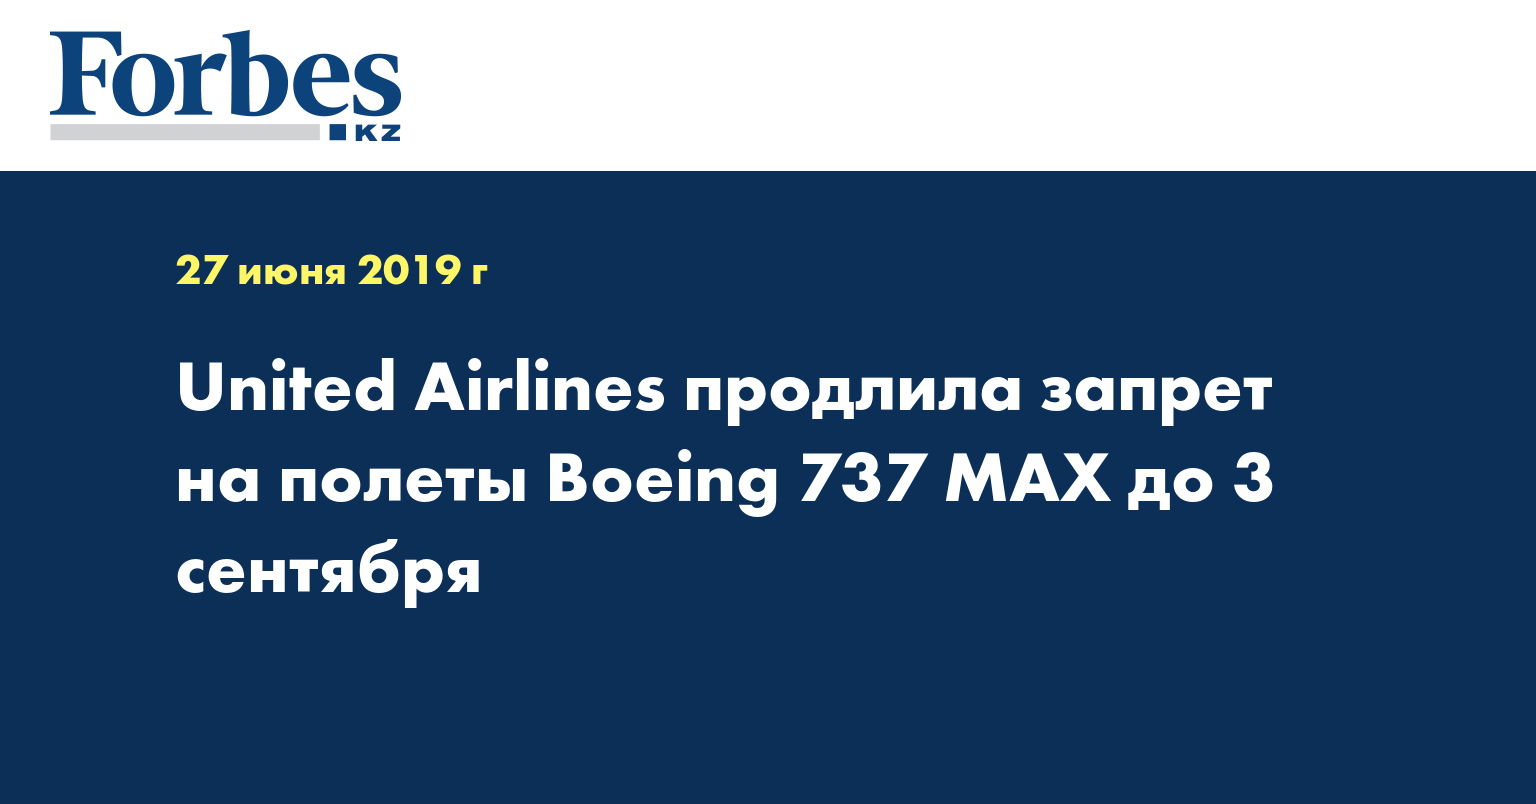 United Airlines продлила запрет на полеты Boeing 737 MAX до 3 сентября